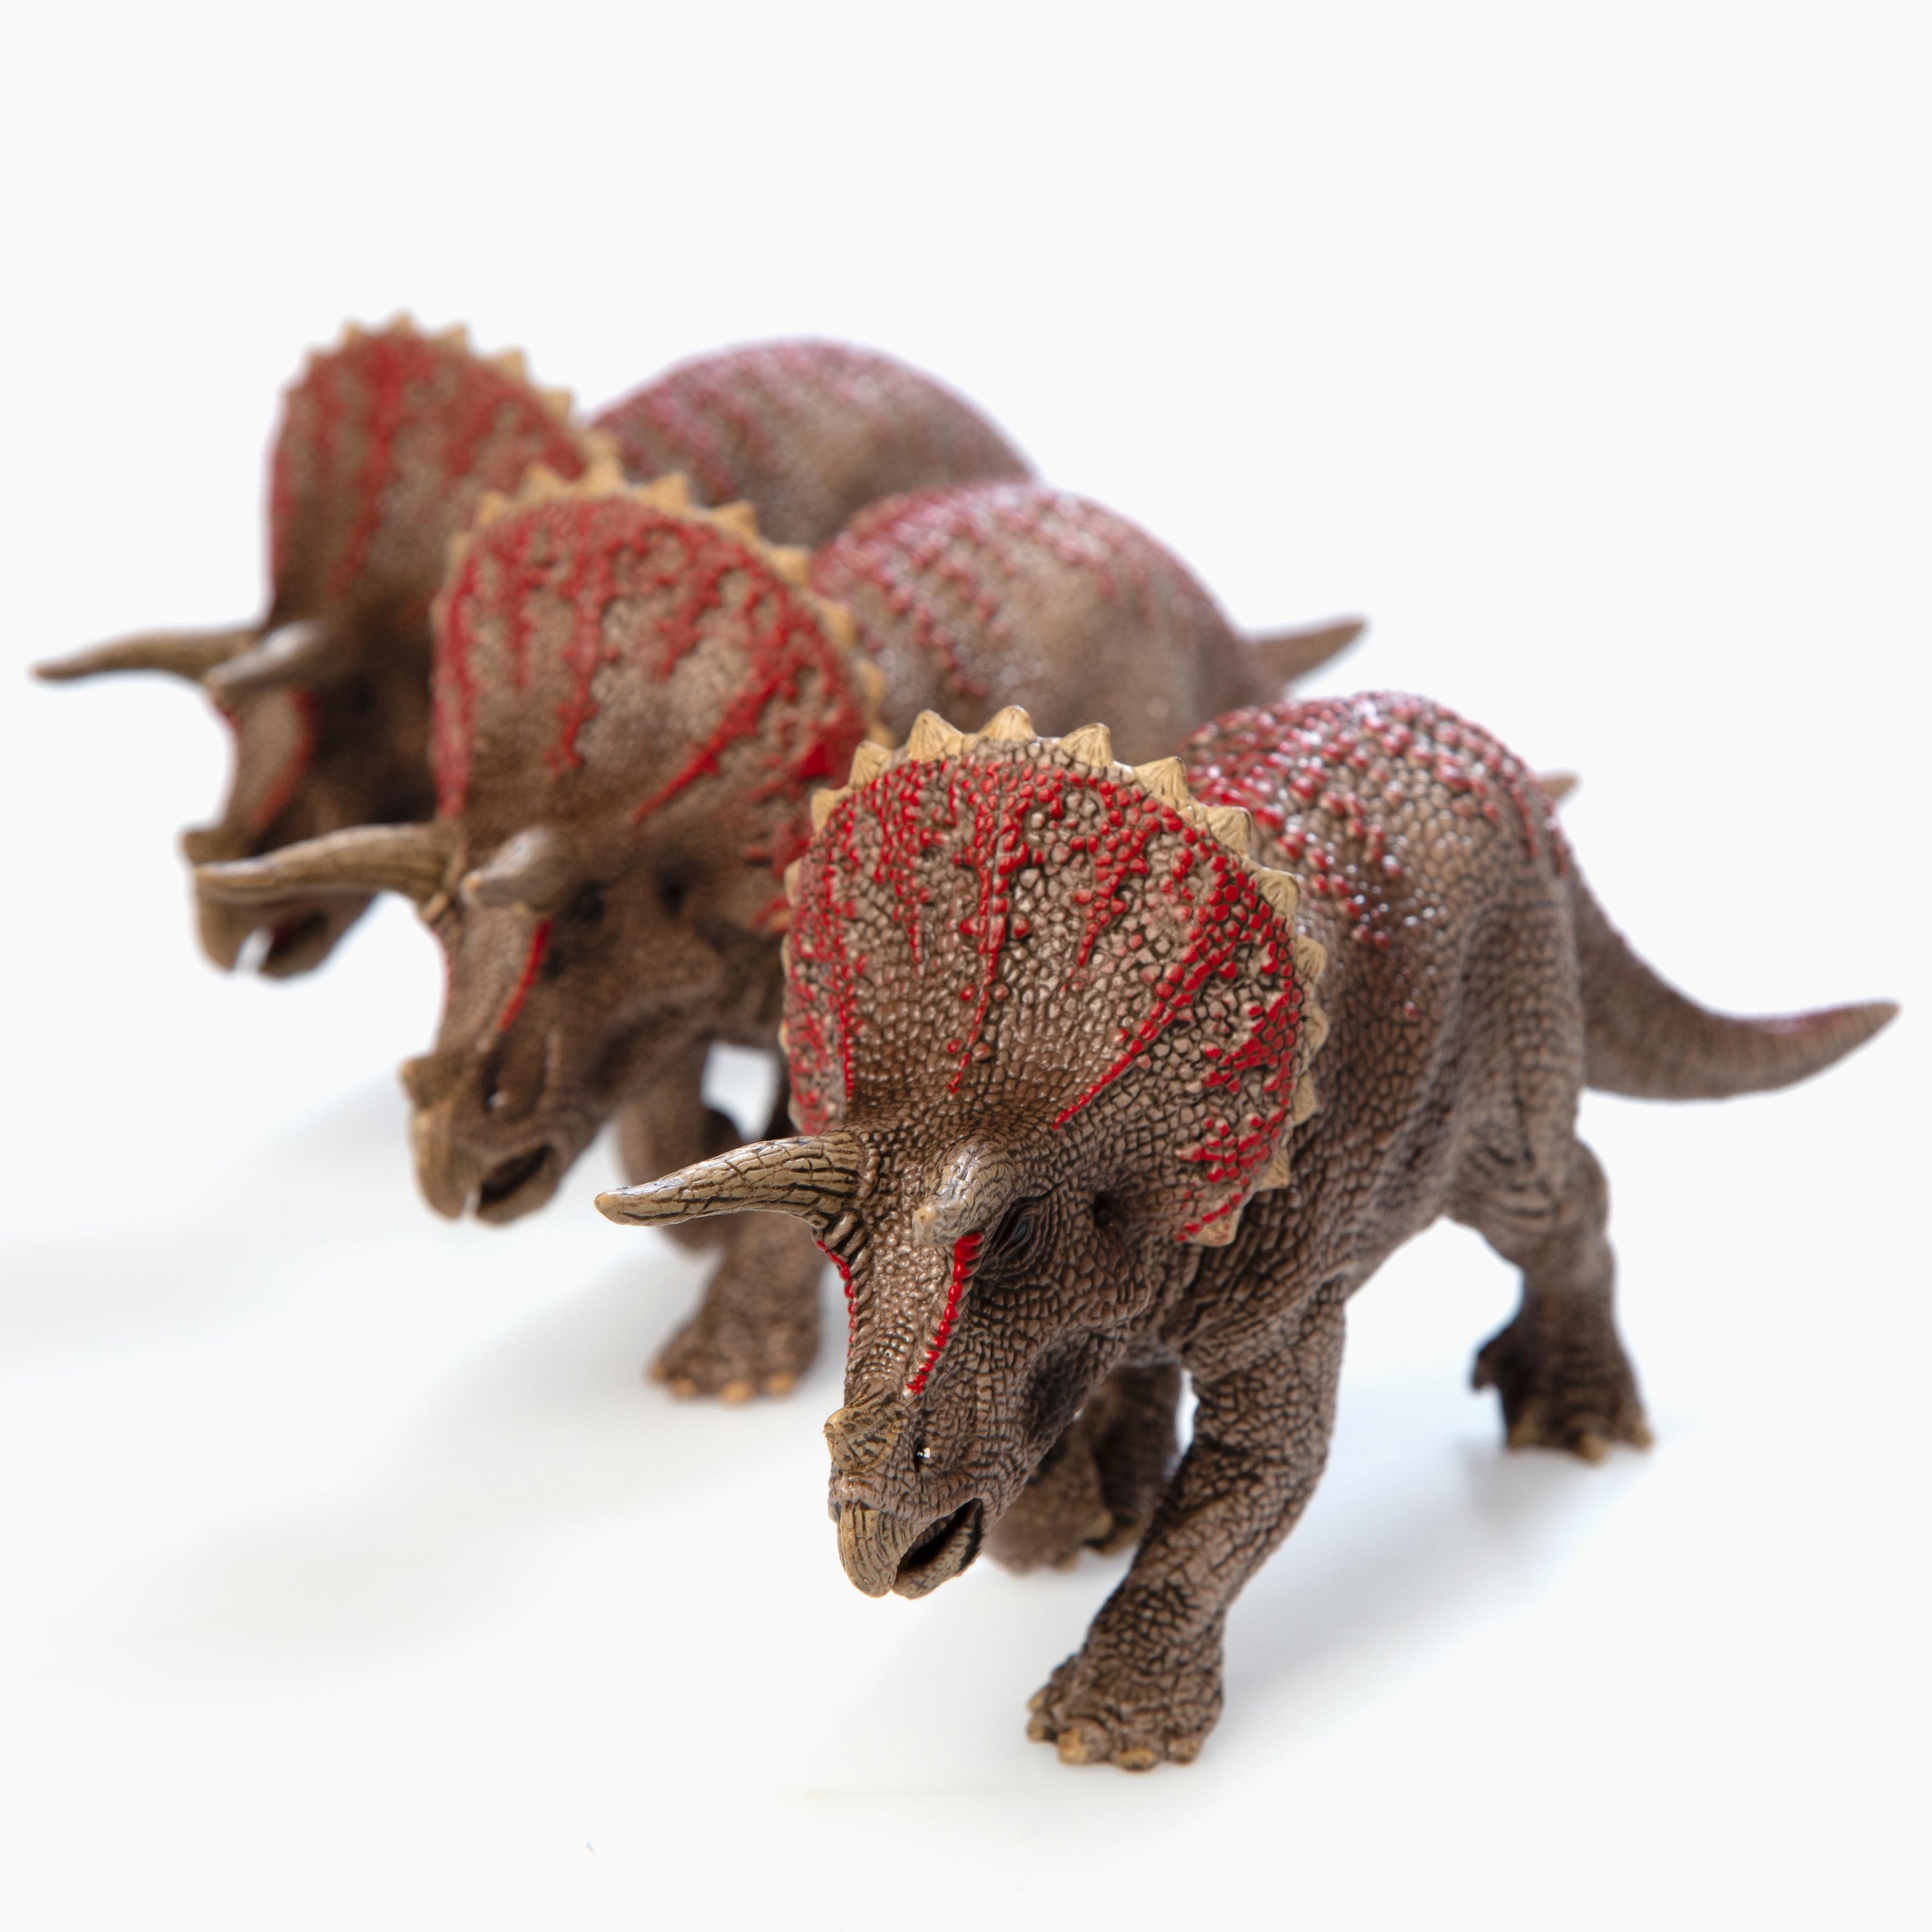 Schleich Triceratops Replica